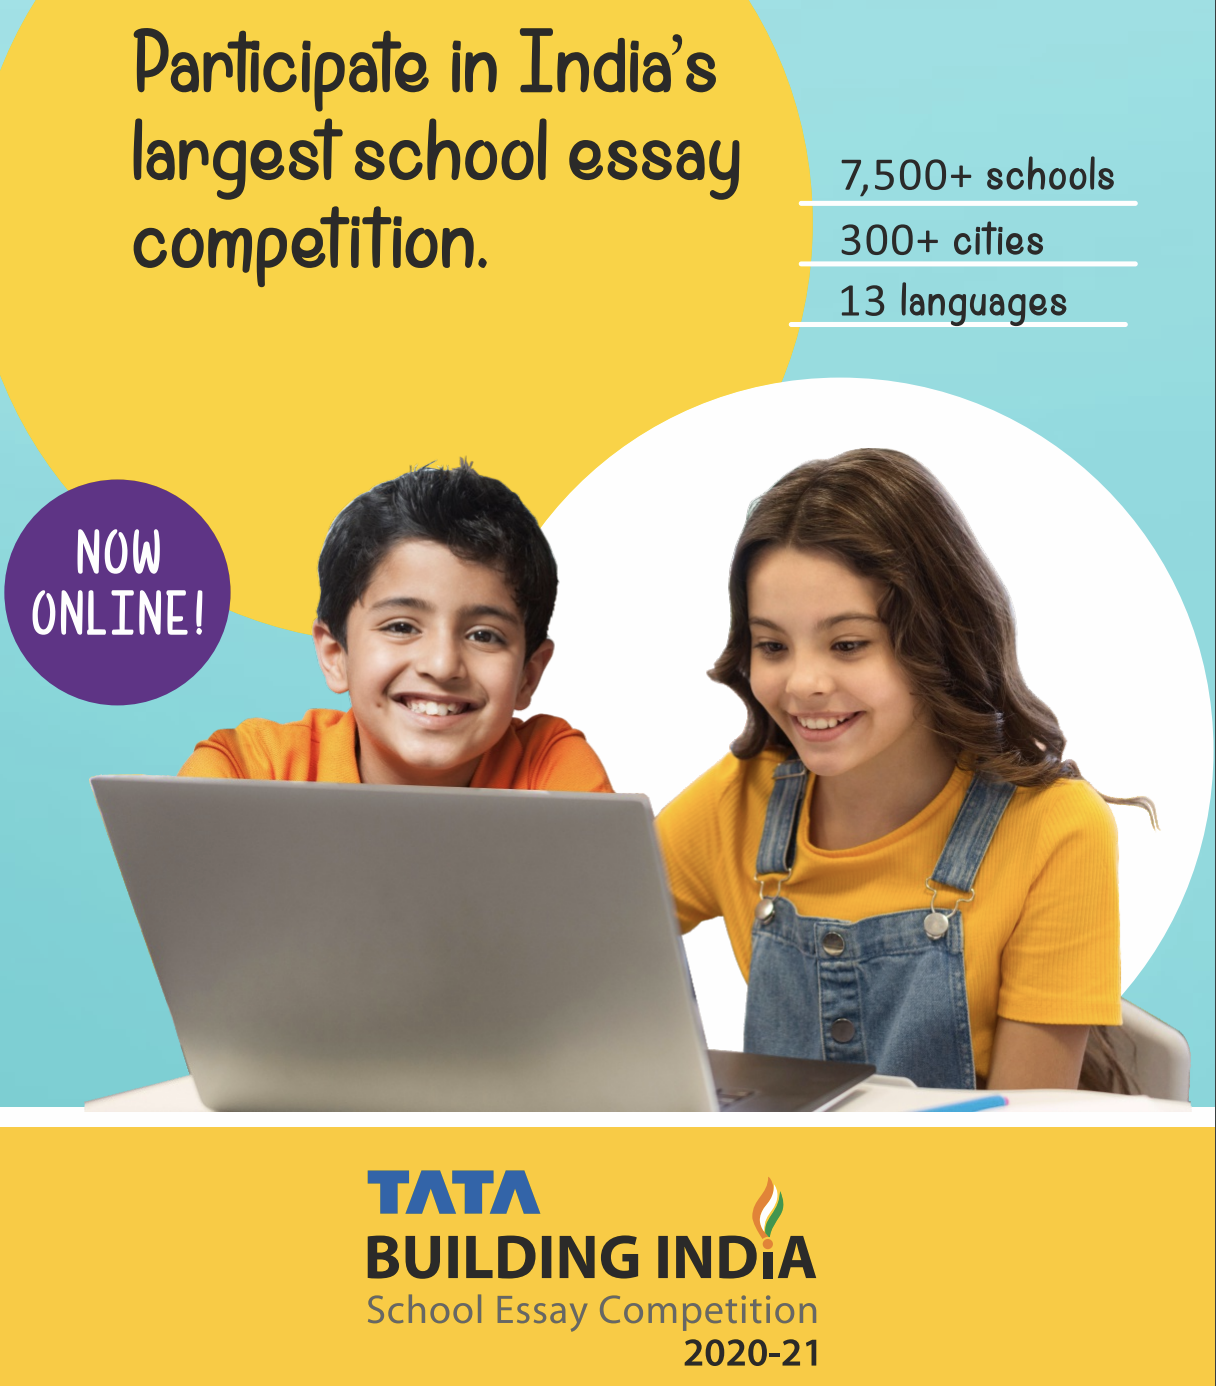 tata building india essay competition